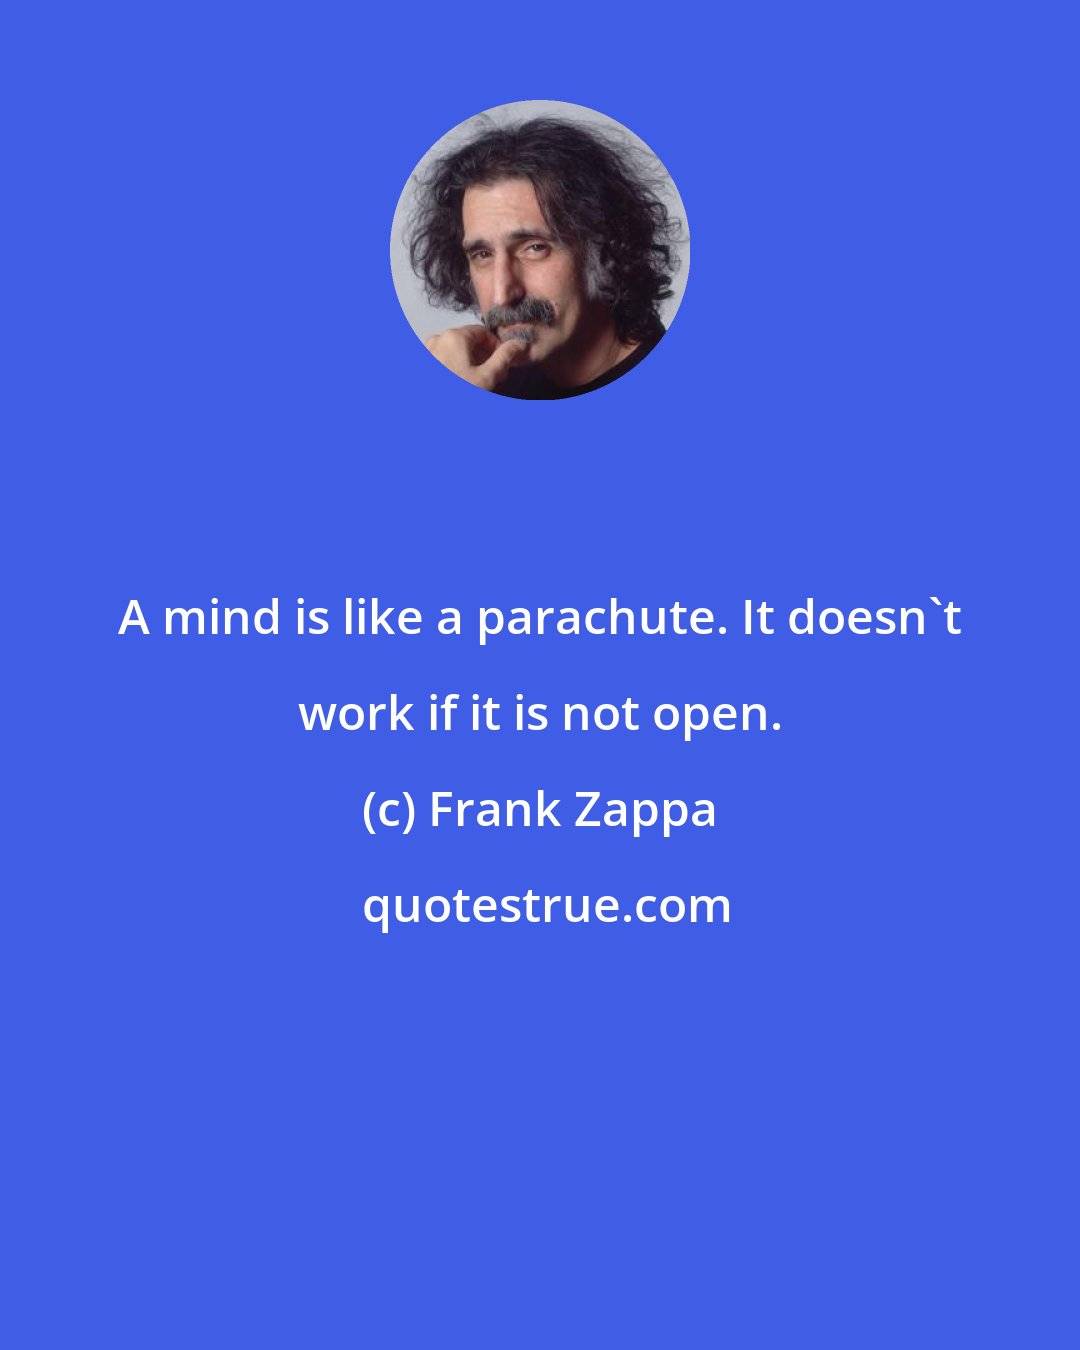 Frank Zappa: A mind is like a parachute. It doesn't work if it is not open.